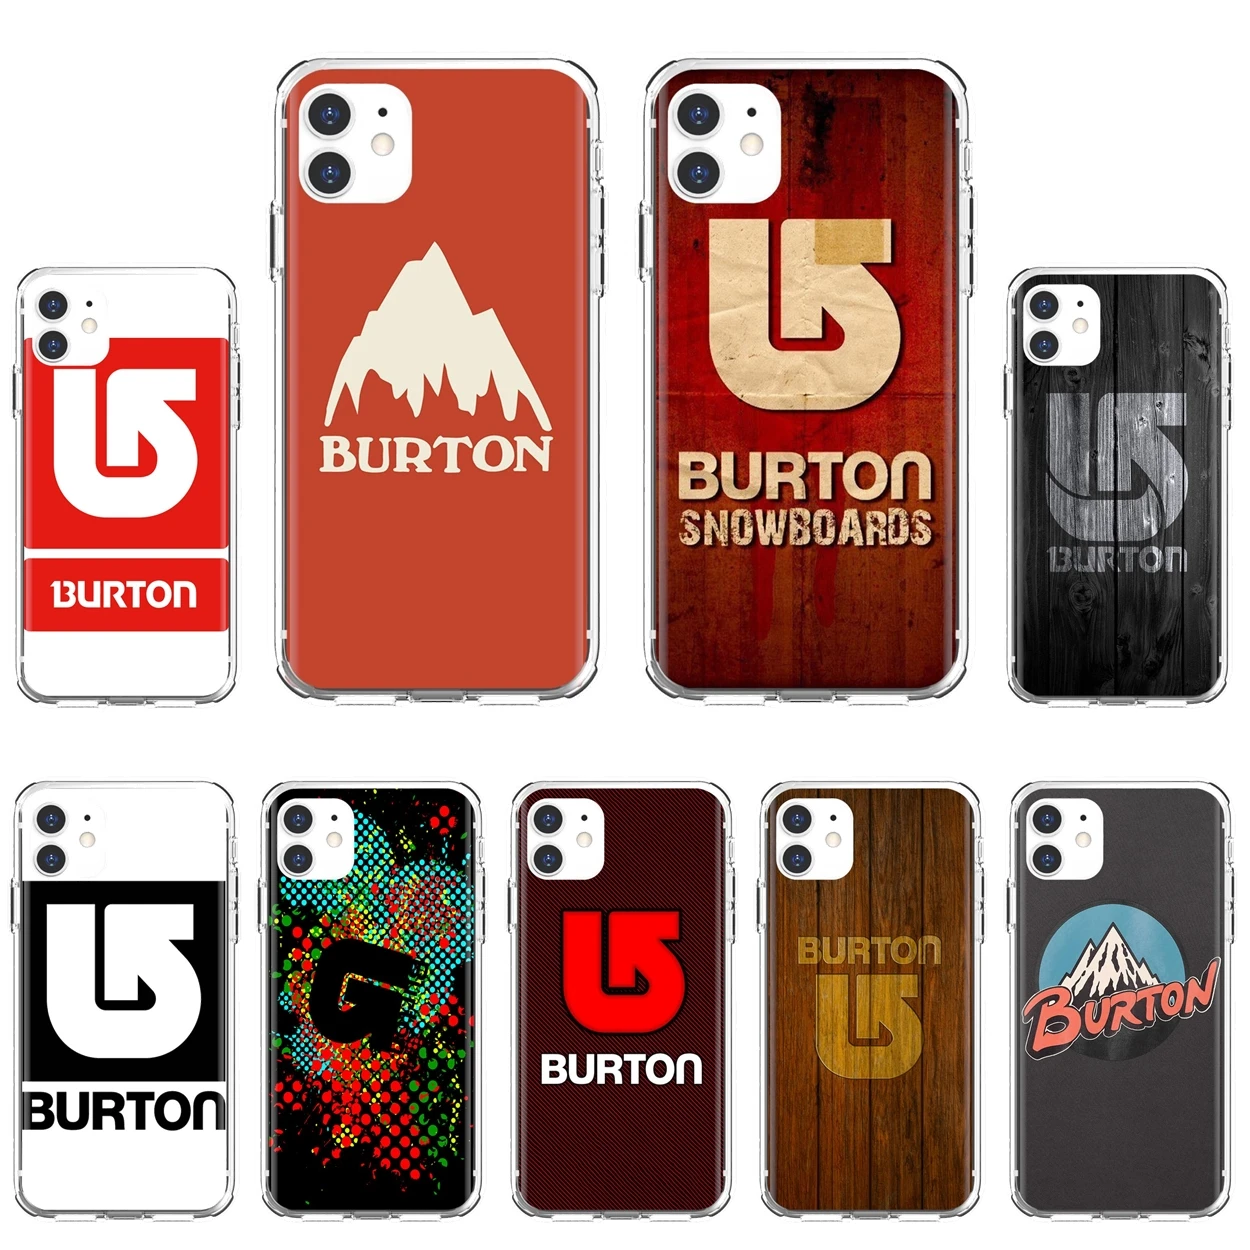 Snowboarding-Burton Phone Skin Case For iPod Touch 5 6 Xiaomi Redmi S2 6 Pro 5A Pocophone F1 LG G6 Q6 Q7 G5